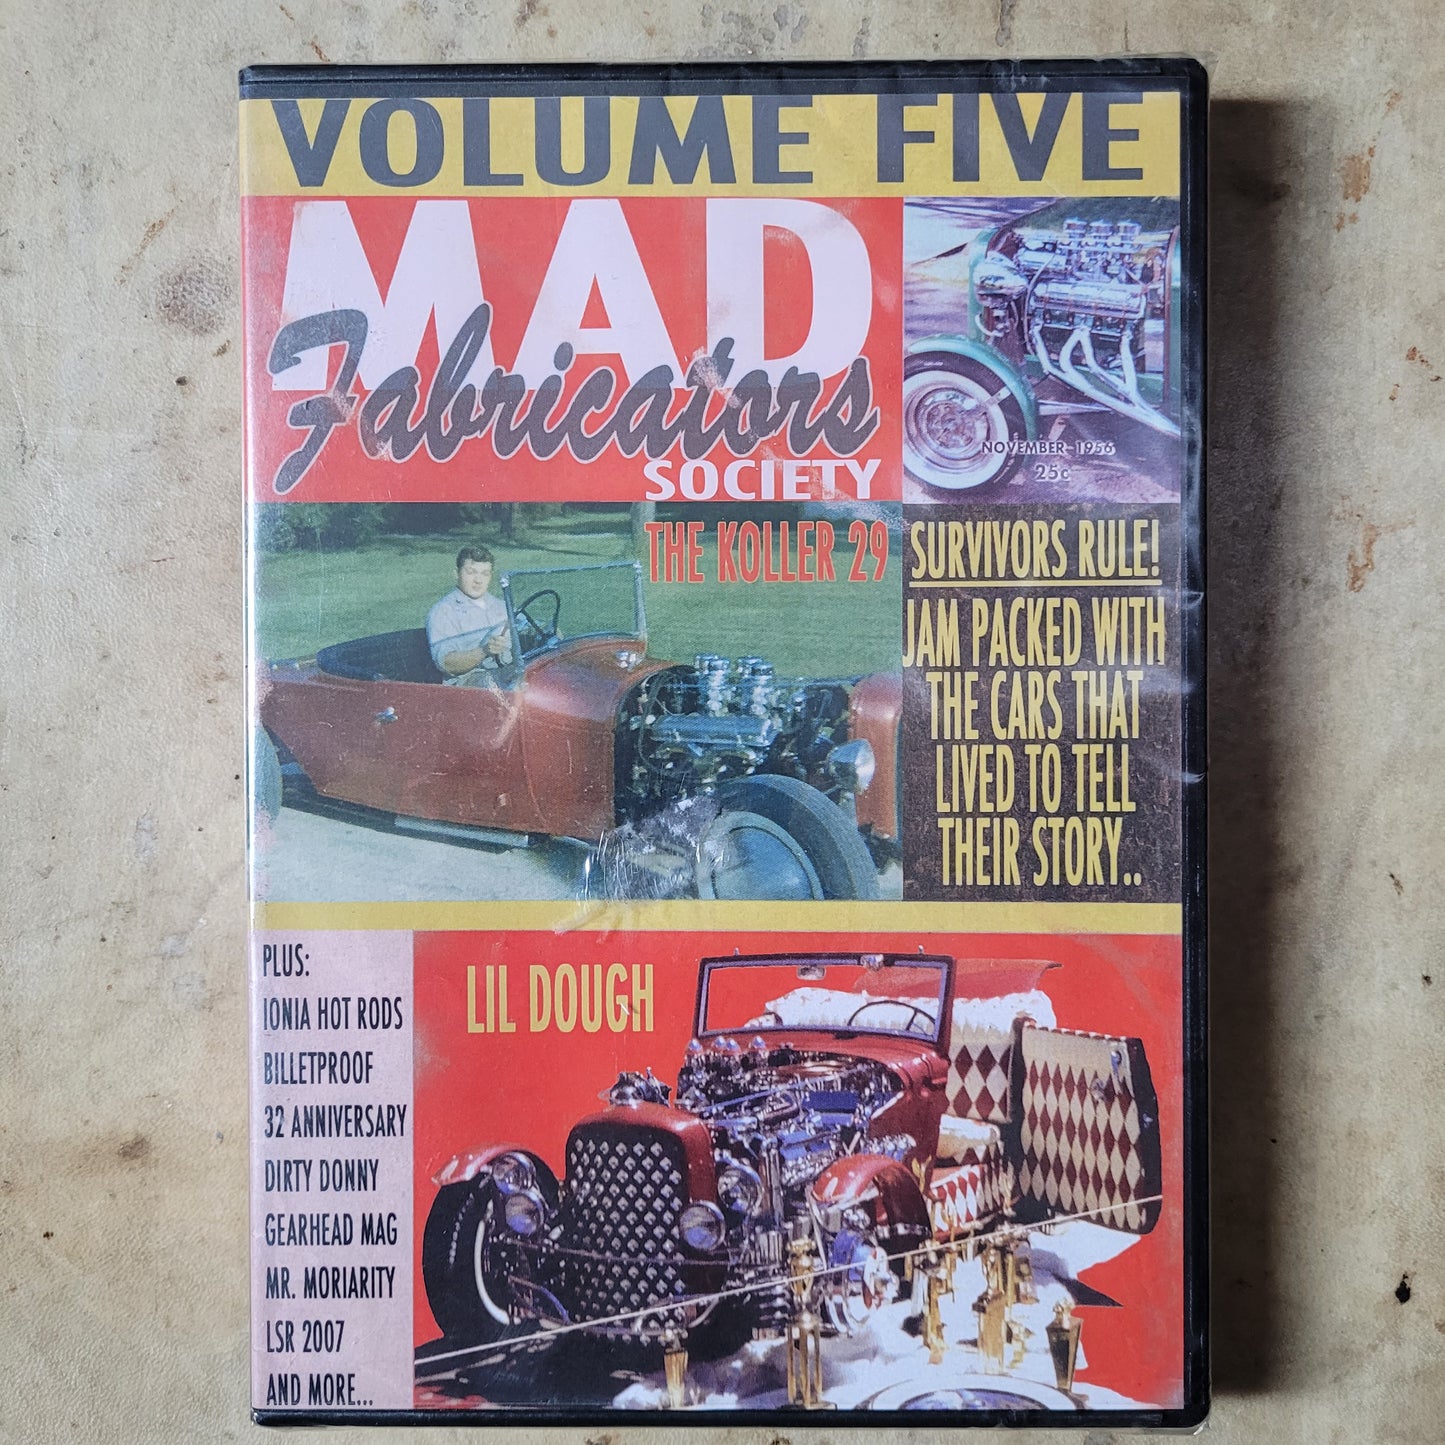 DVD Mad fabricators society VOL. 5